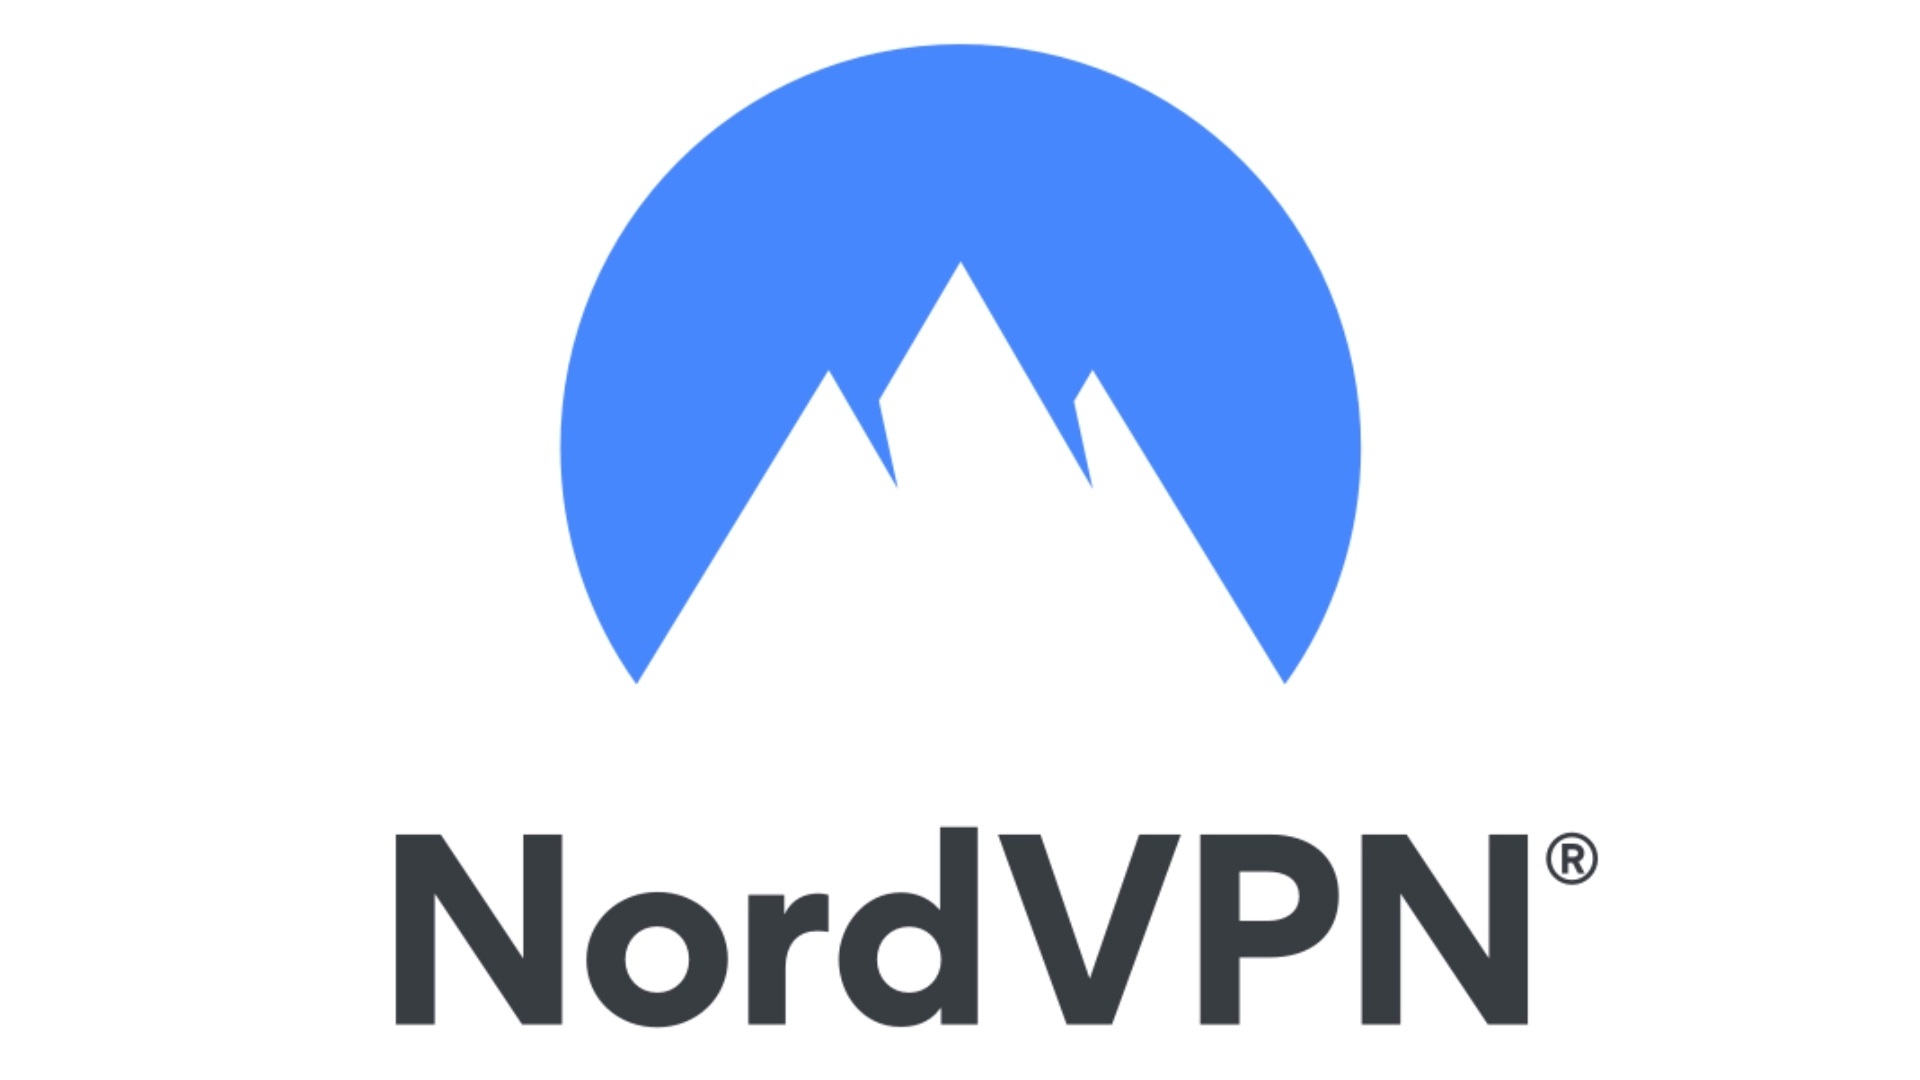 Best Chrome VPN: NordVPN. Image shows the company's logo.